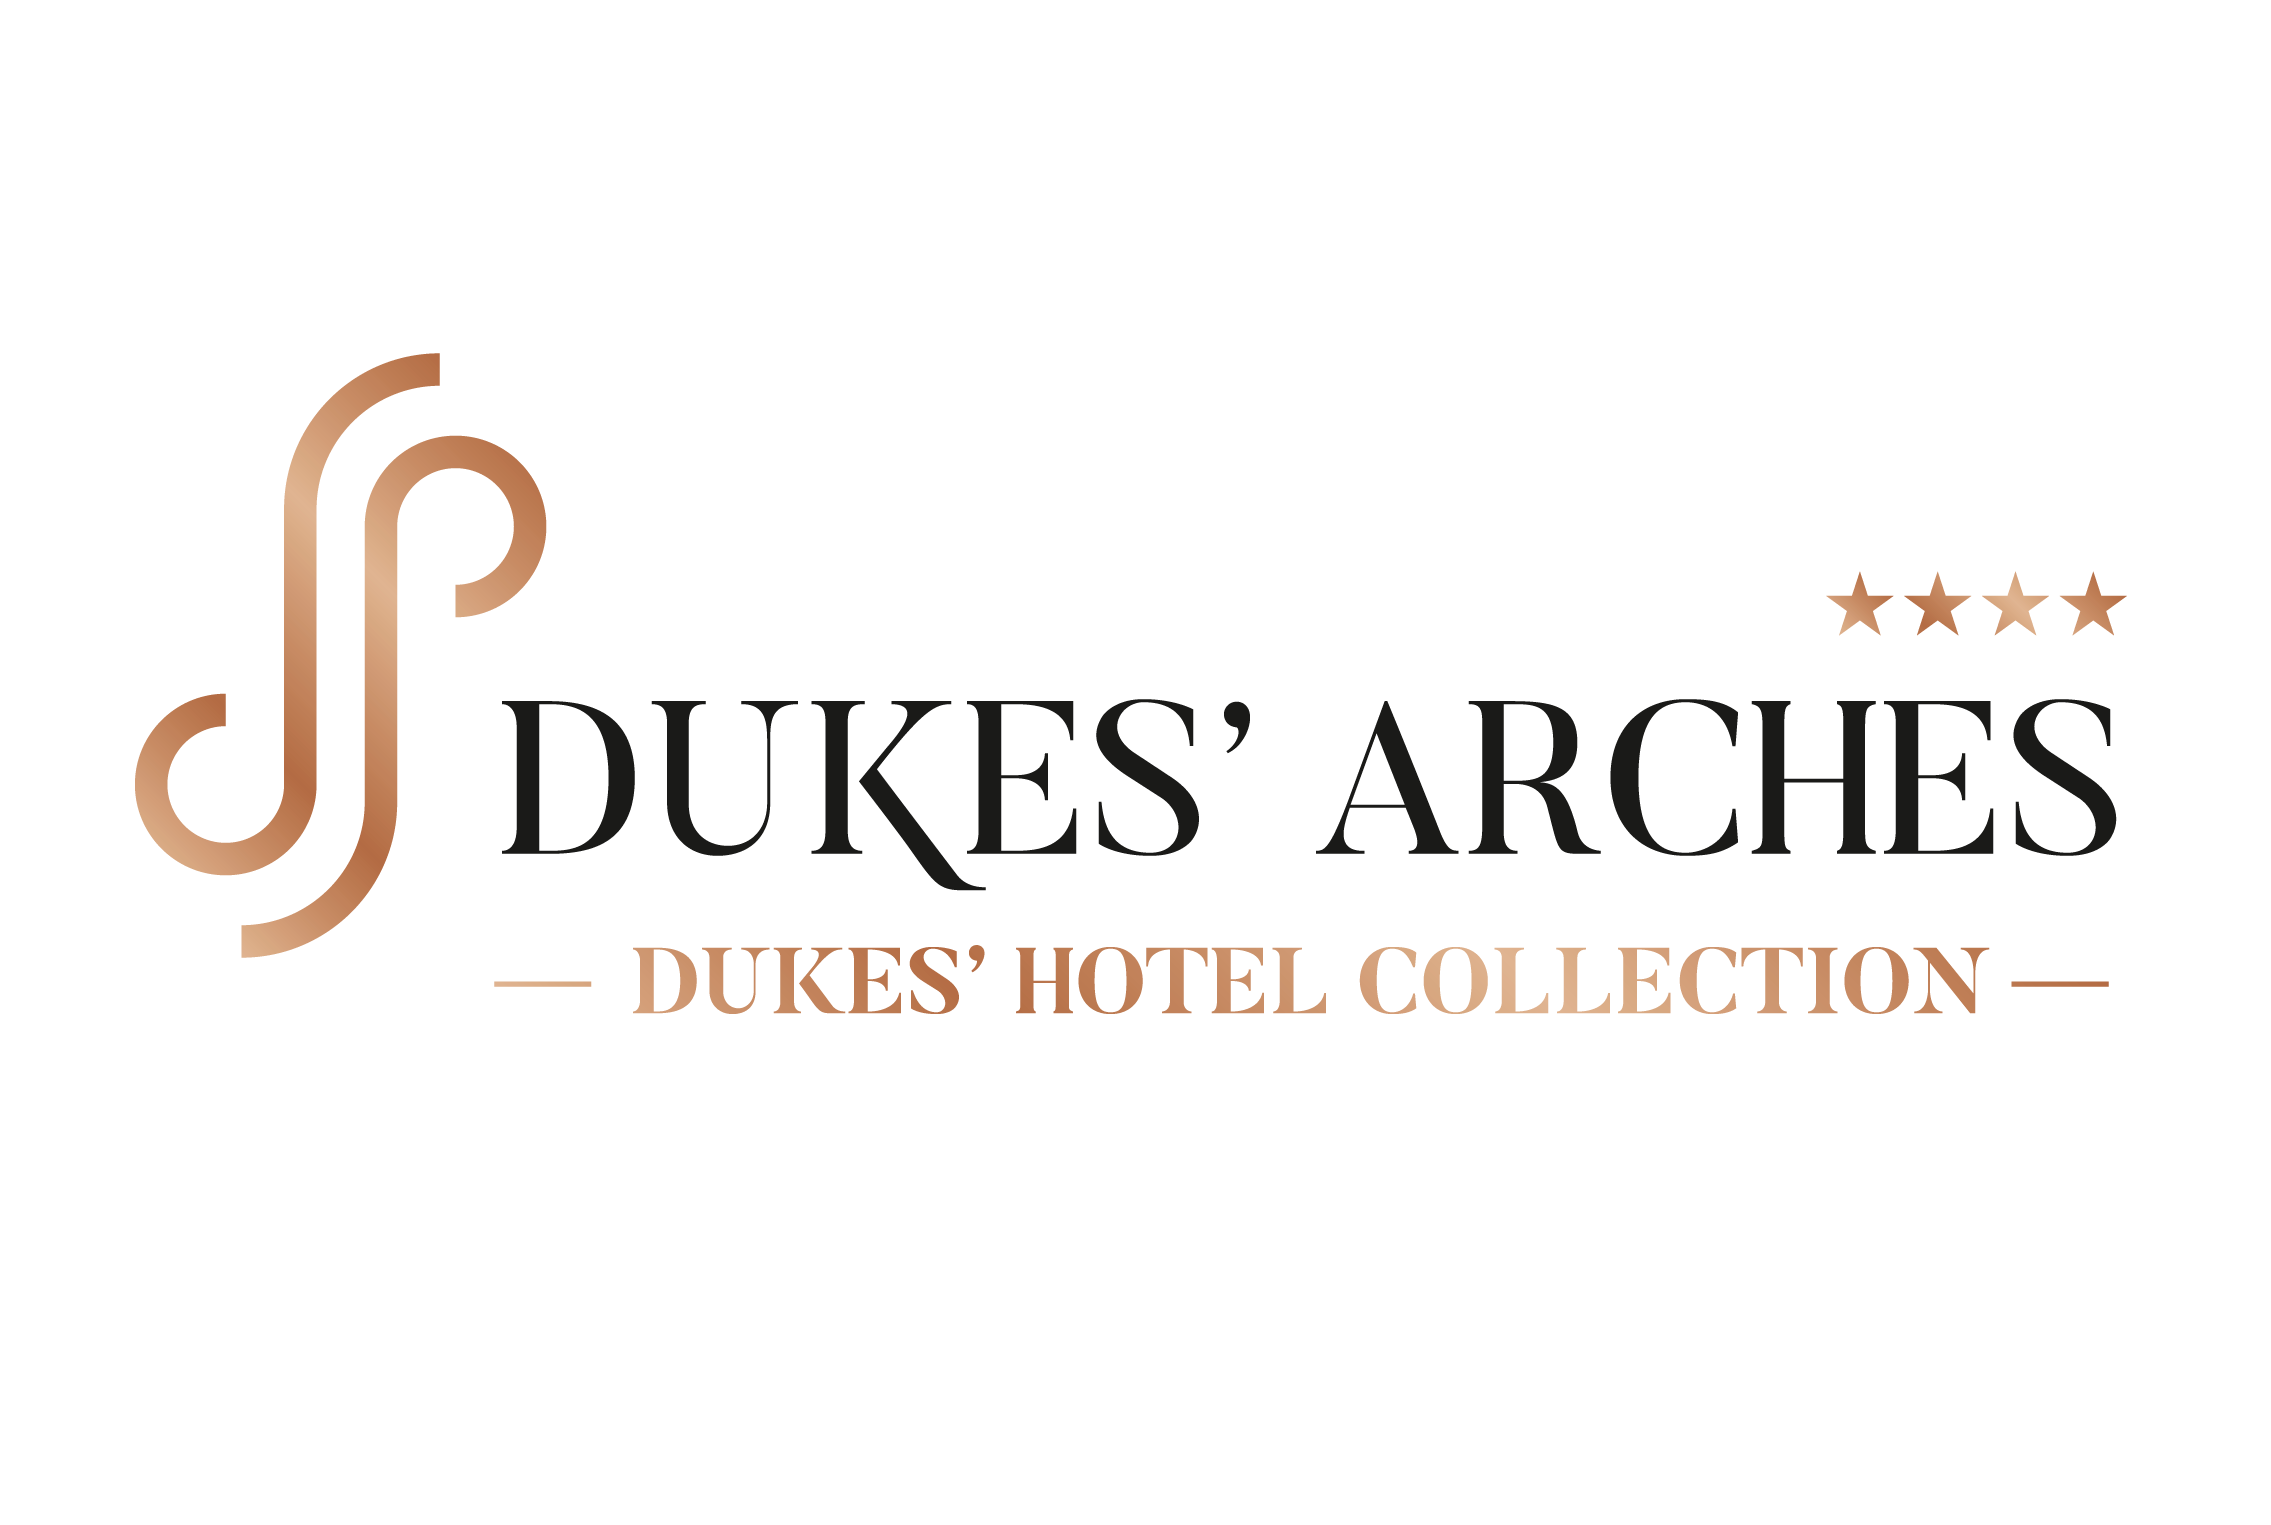 Hotel Dukes‘ Arches